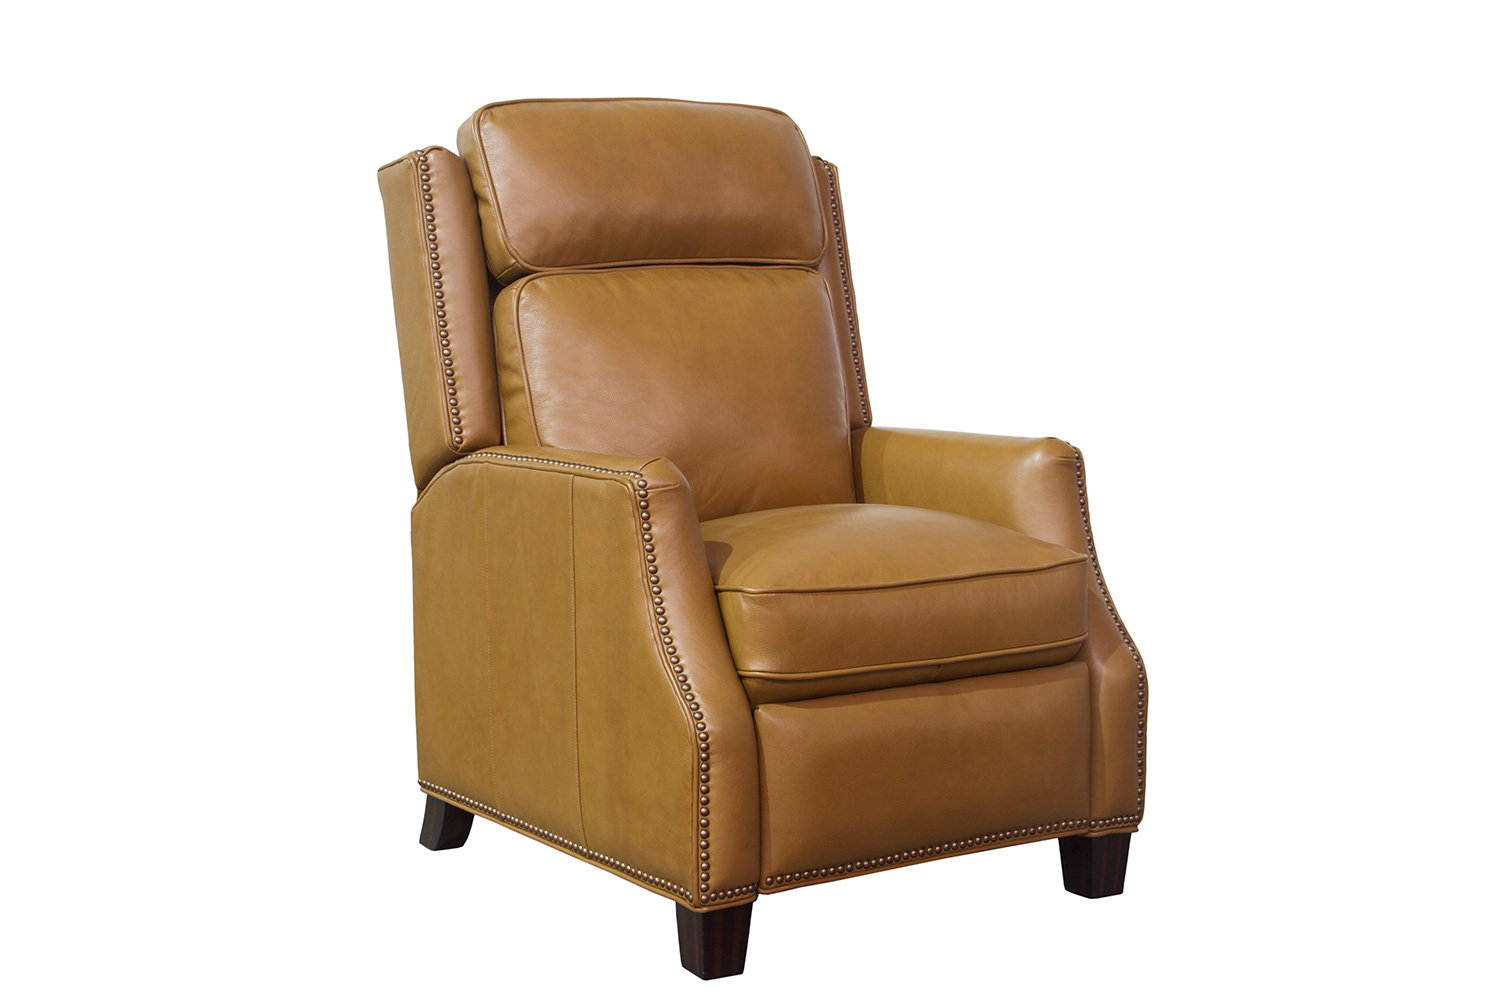 Barcalounger Van Buren Recliner Chair - Shoreham Ponytail/All Leather